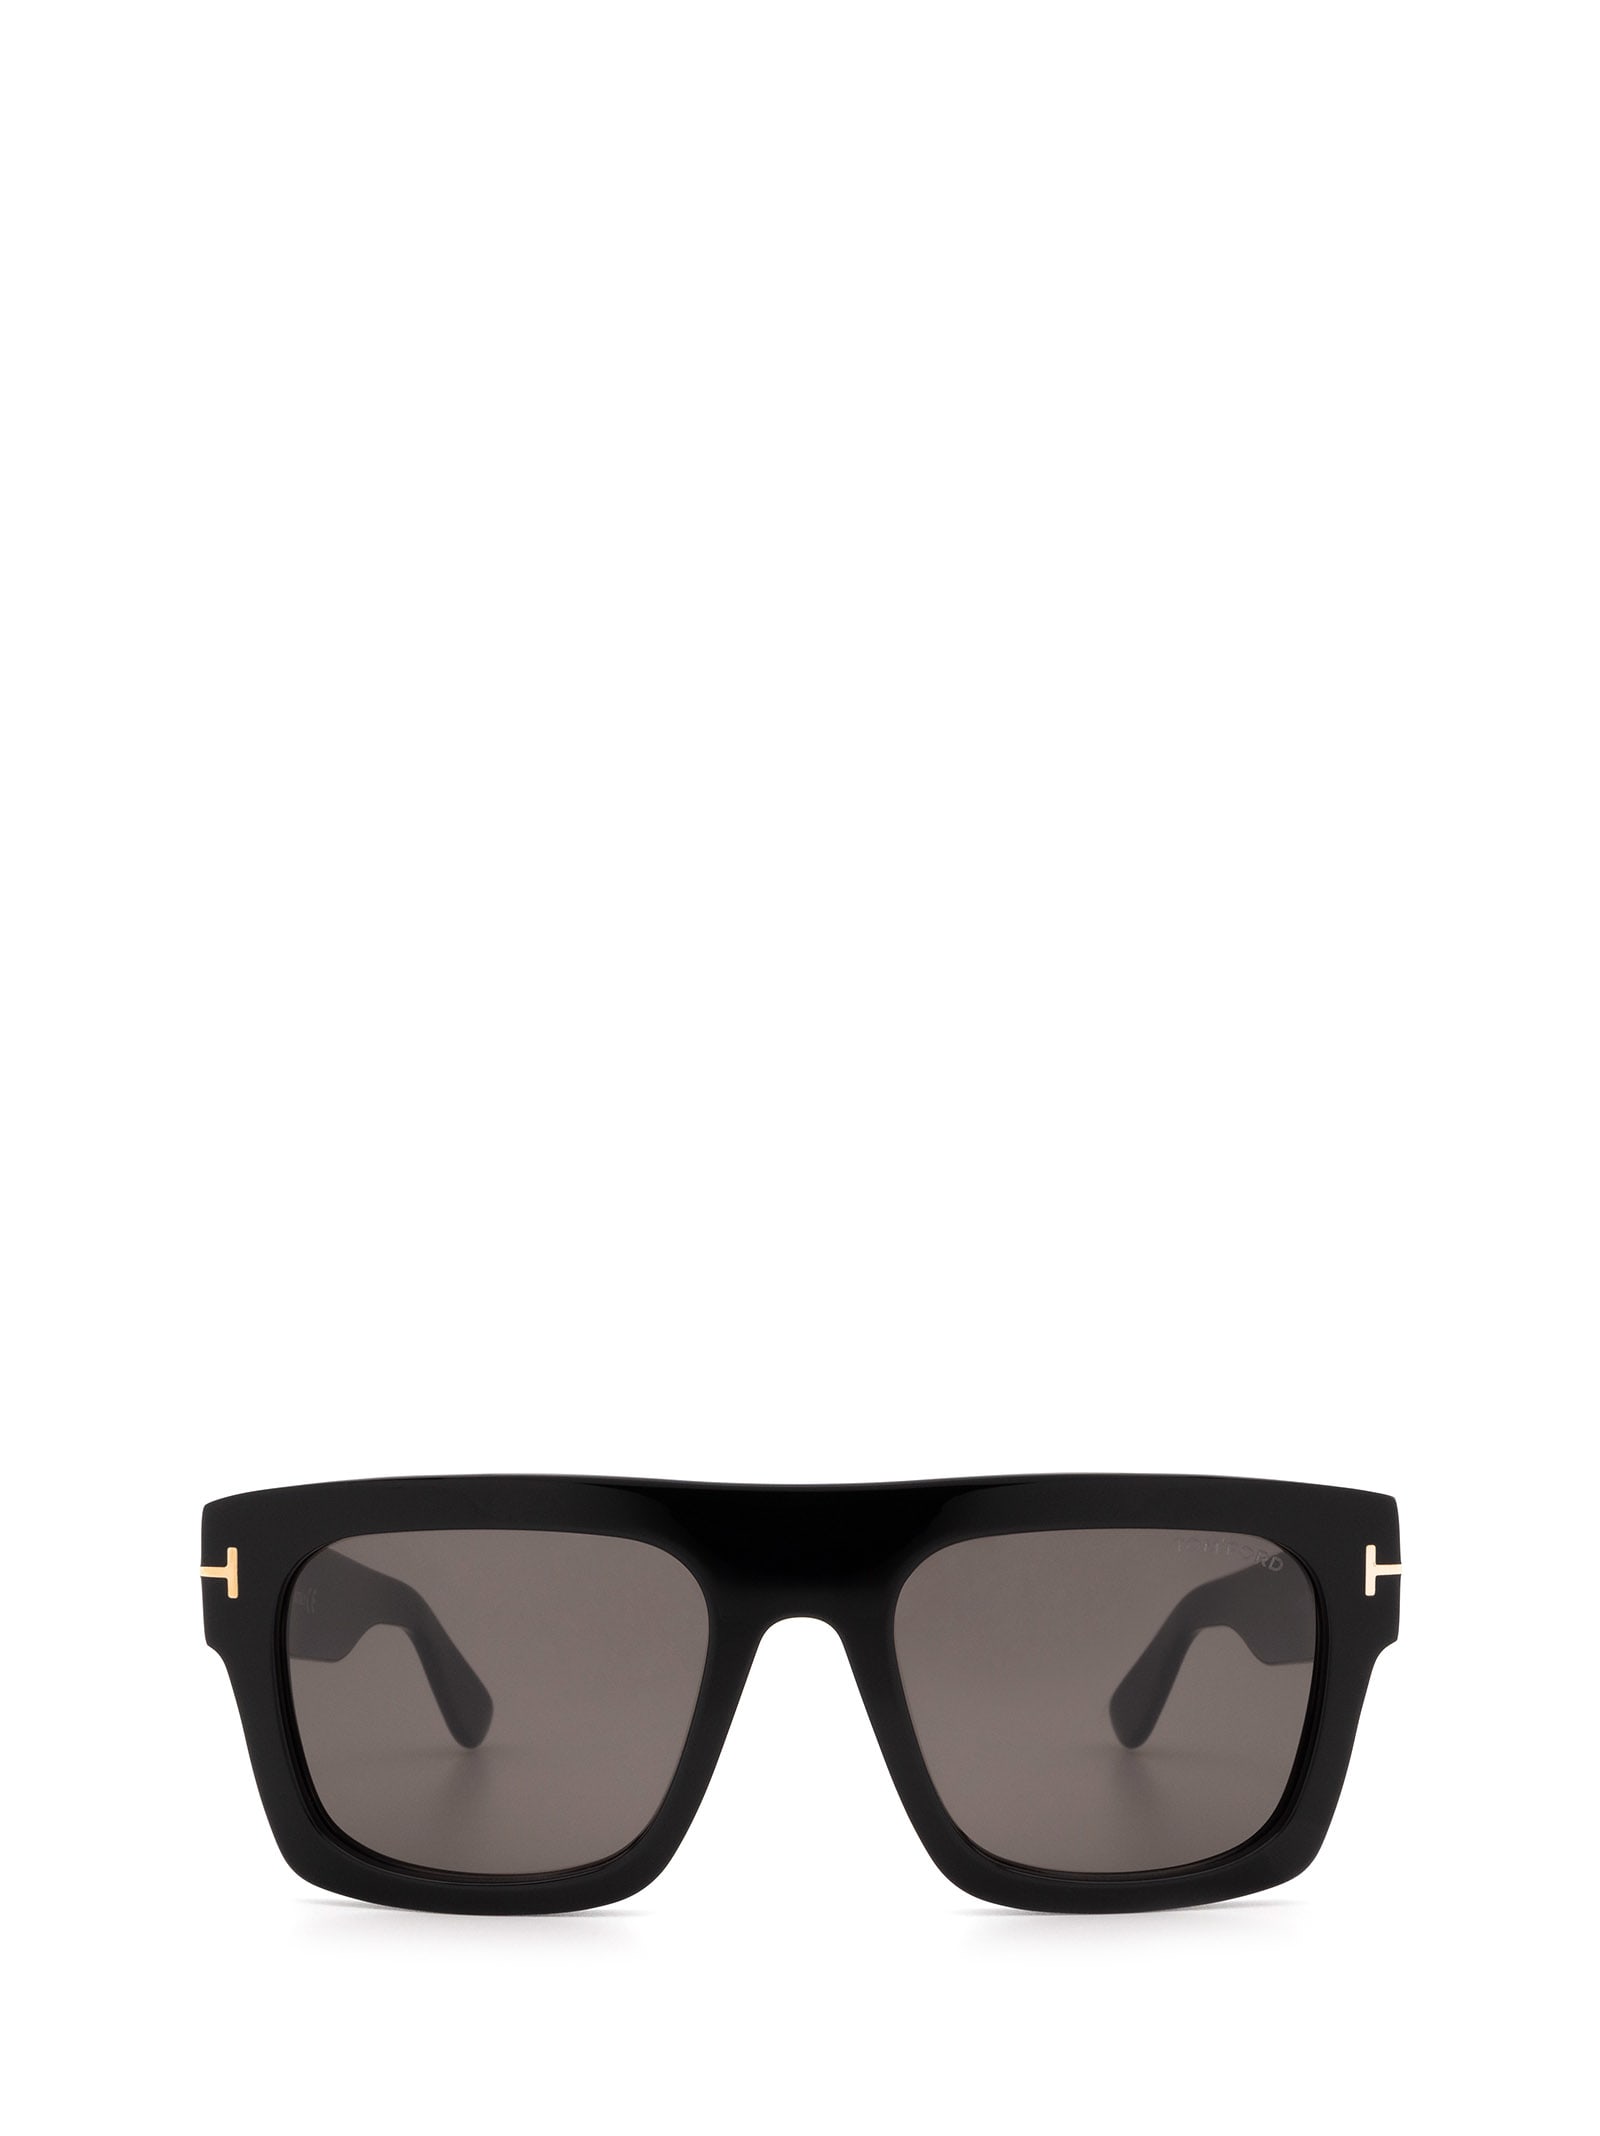 Tom Ford Ft0711 Shiny Black Sunglasses